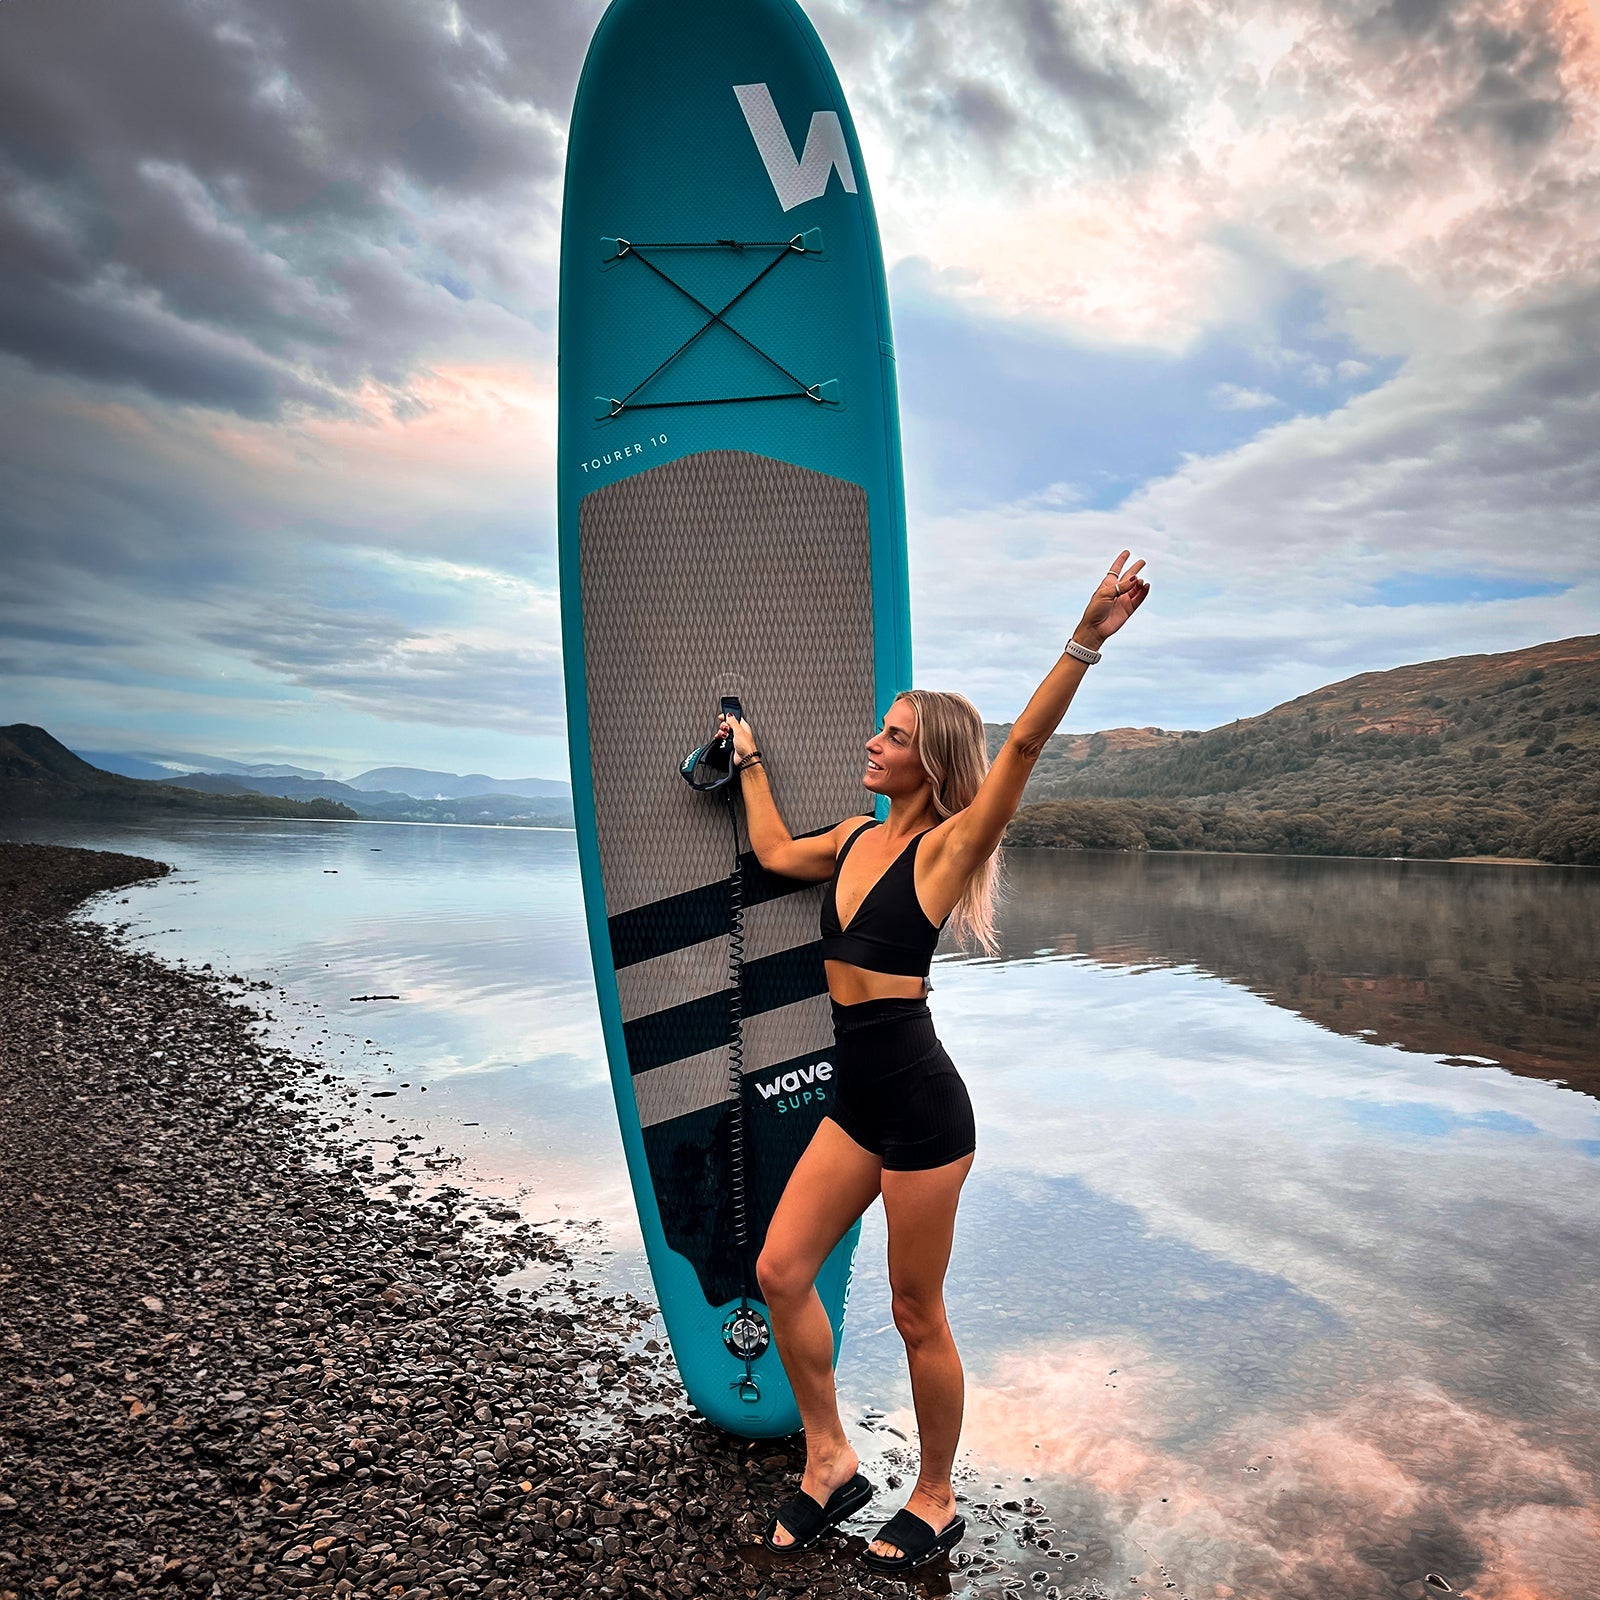 Tourer SUP | Inflatable Stand - Up Paddleboard | 10/11ft | Aqua - Wave Sups USA